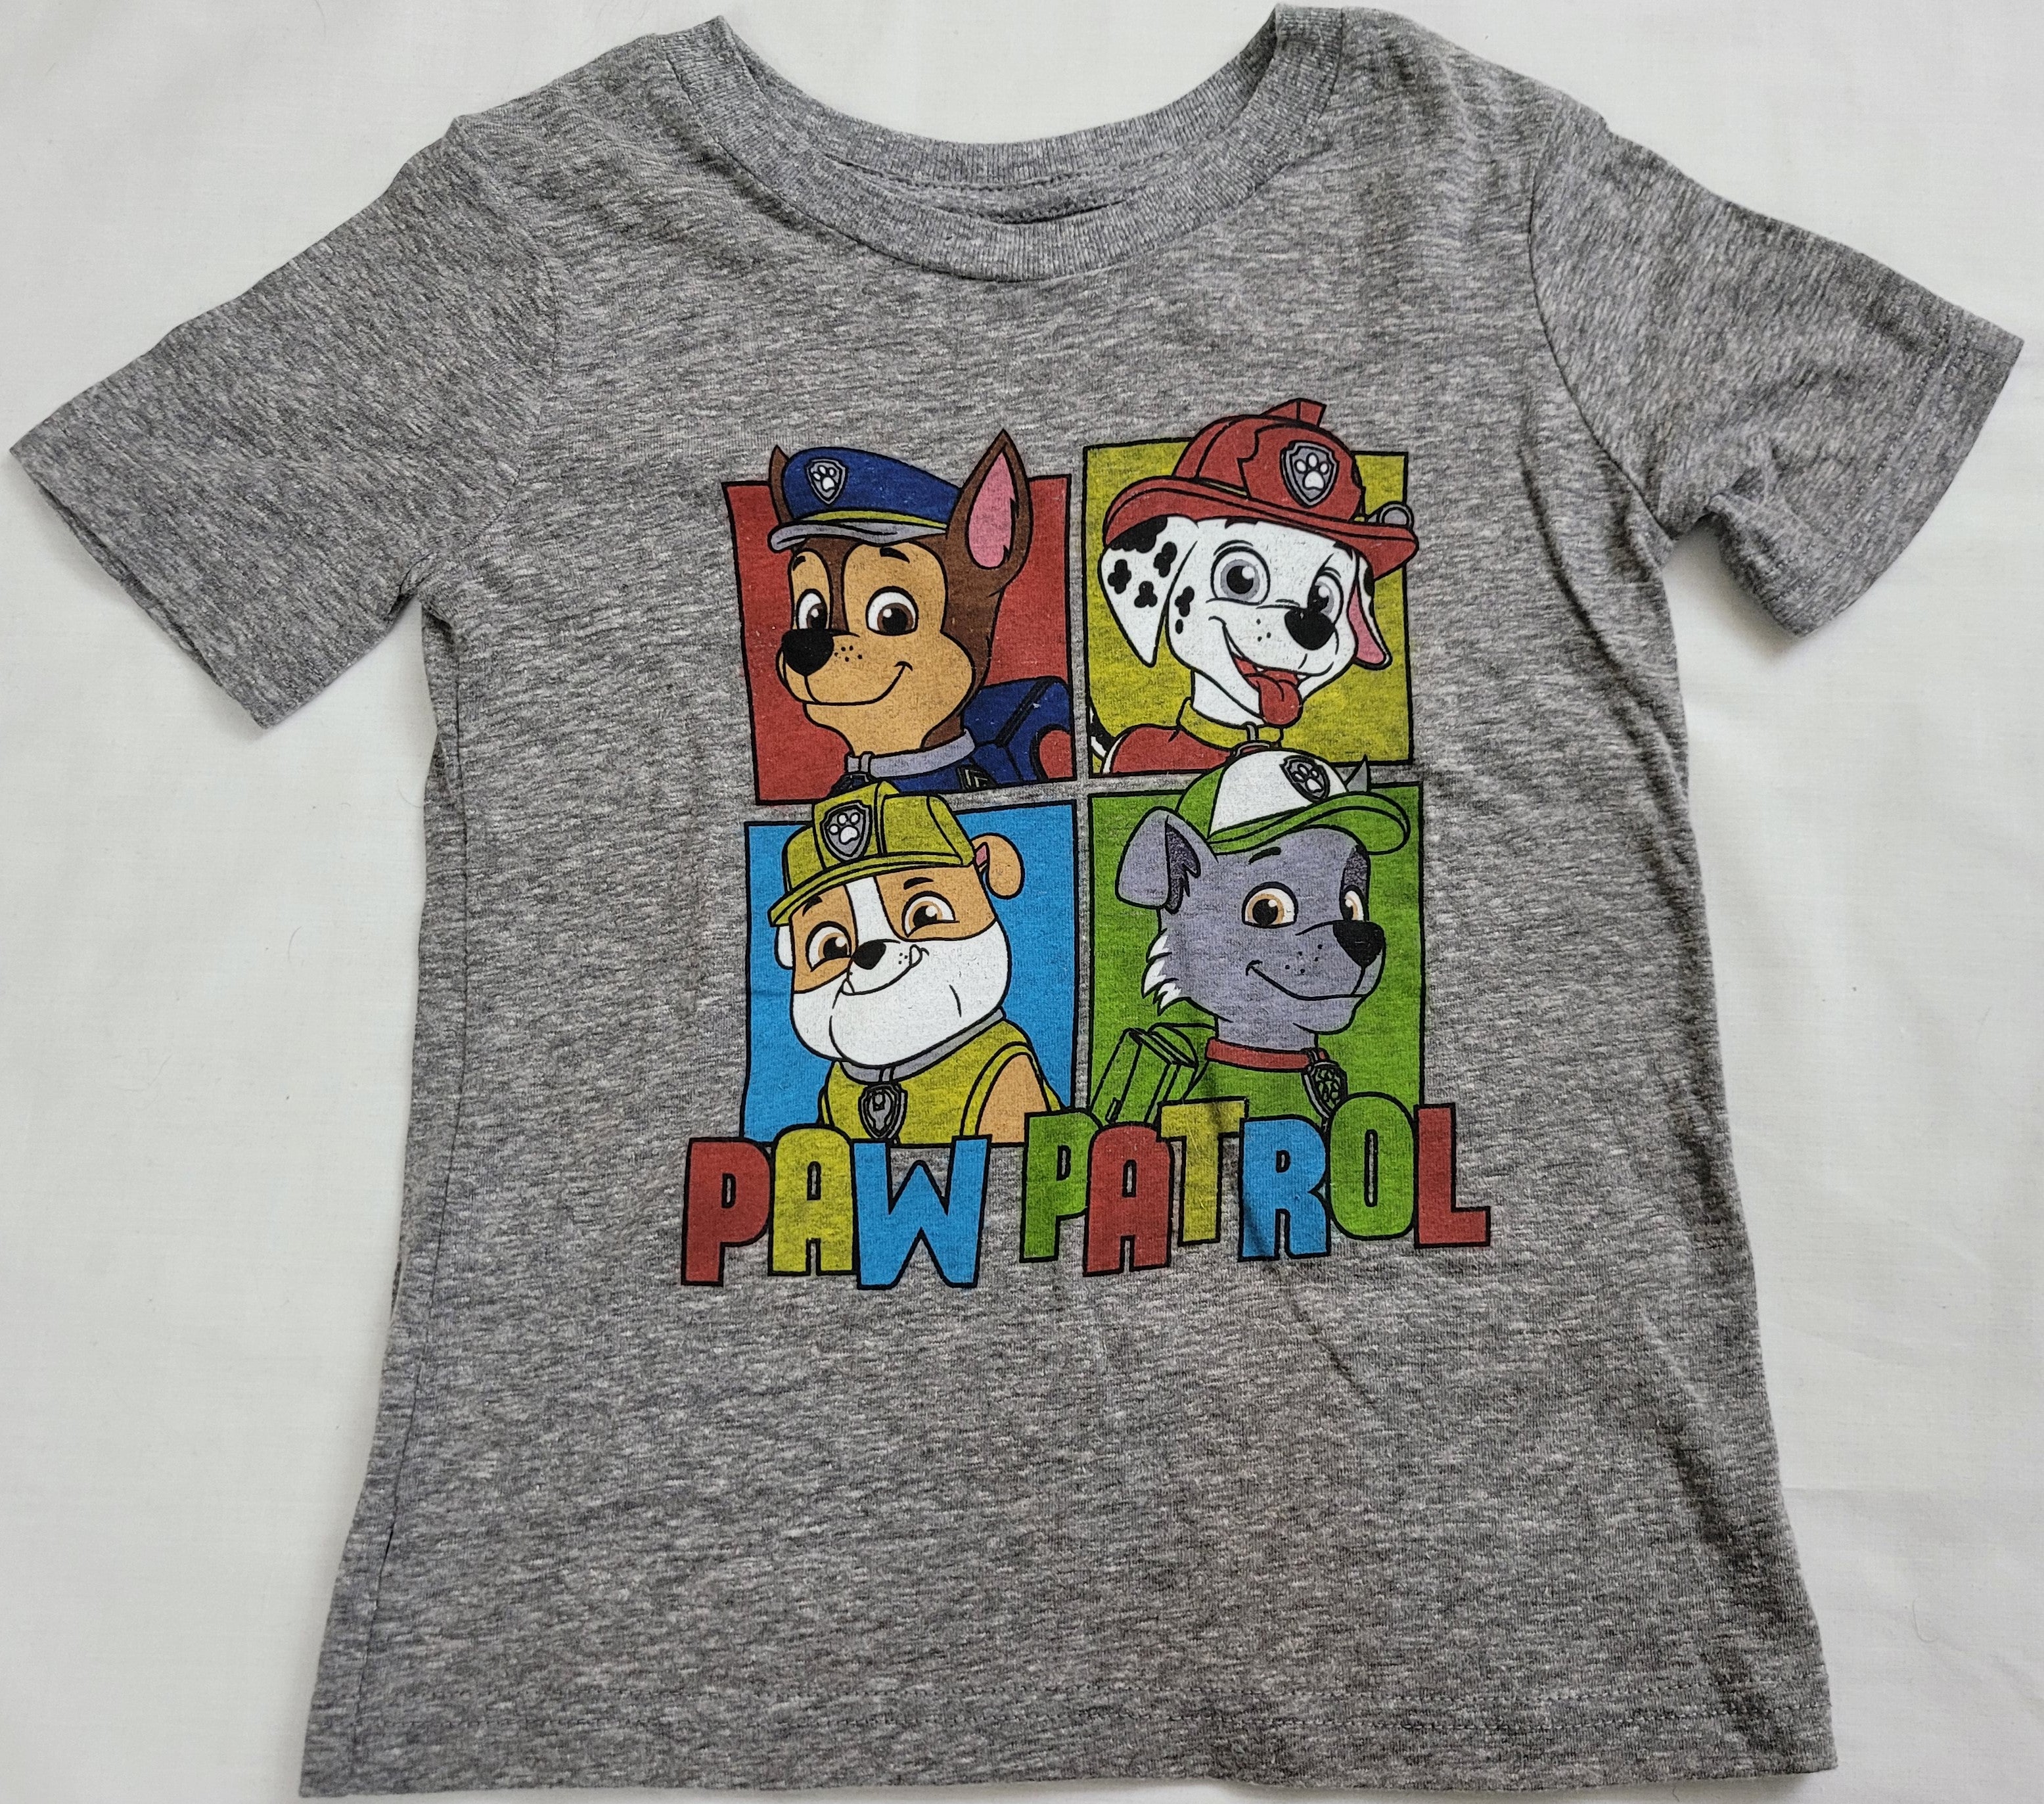 Team Paw Patrol Boys T-Shirt Nick Jr (Grey) | eBay